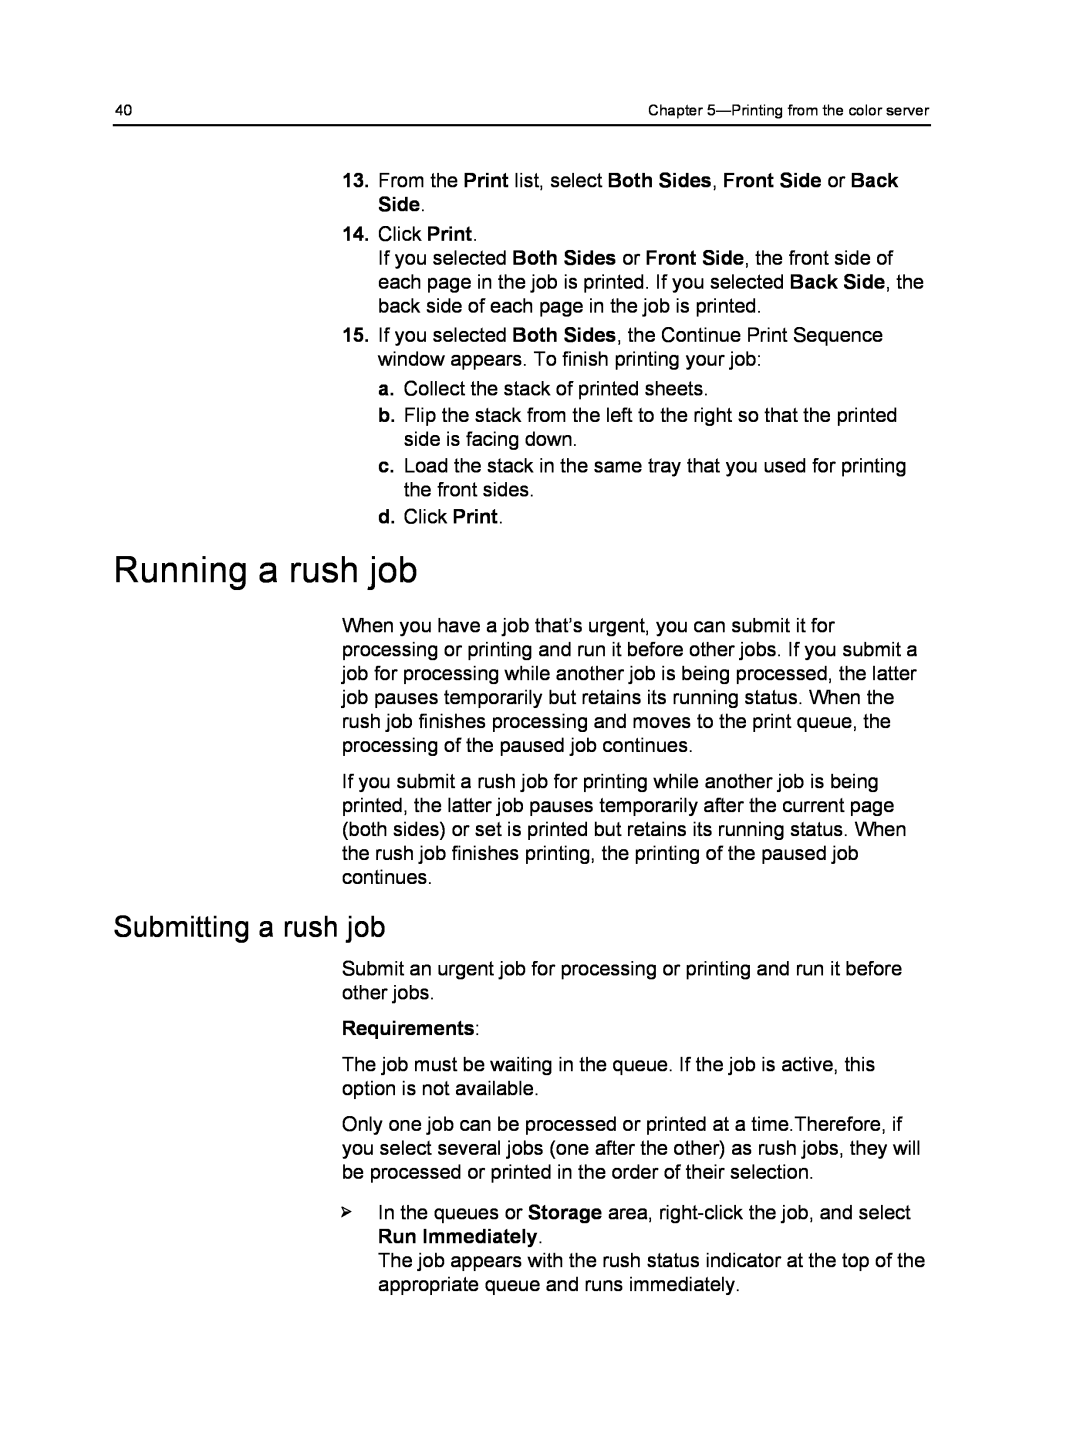 Xerox 560, 550 manual Running a rush job, Submitting a rush job, Requirements 